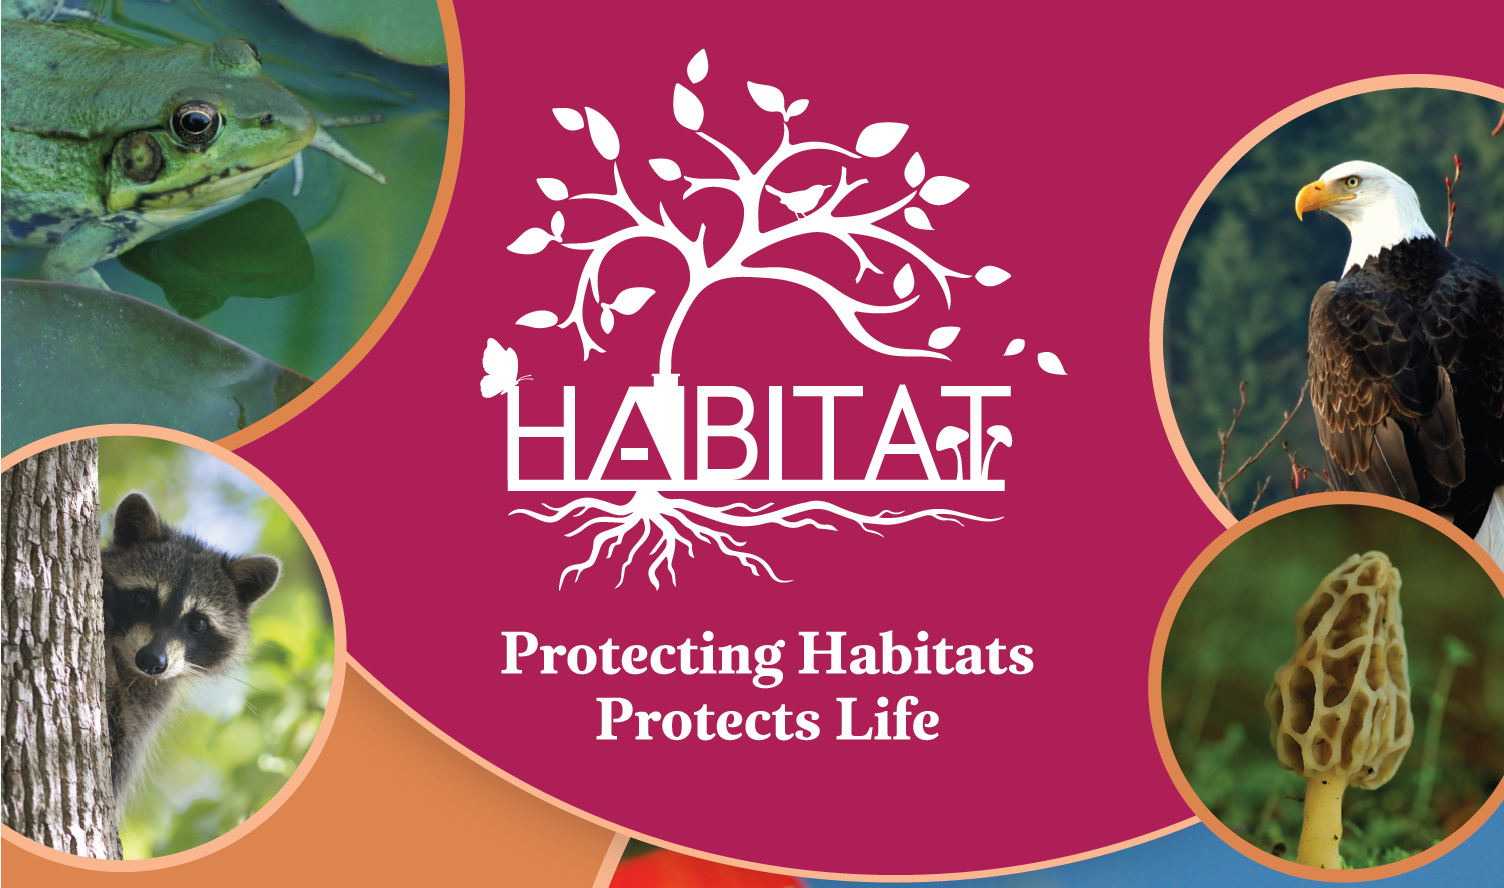 Smithsonian’s Habitat: Protecting Habitats Protects Life